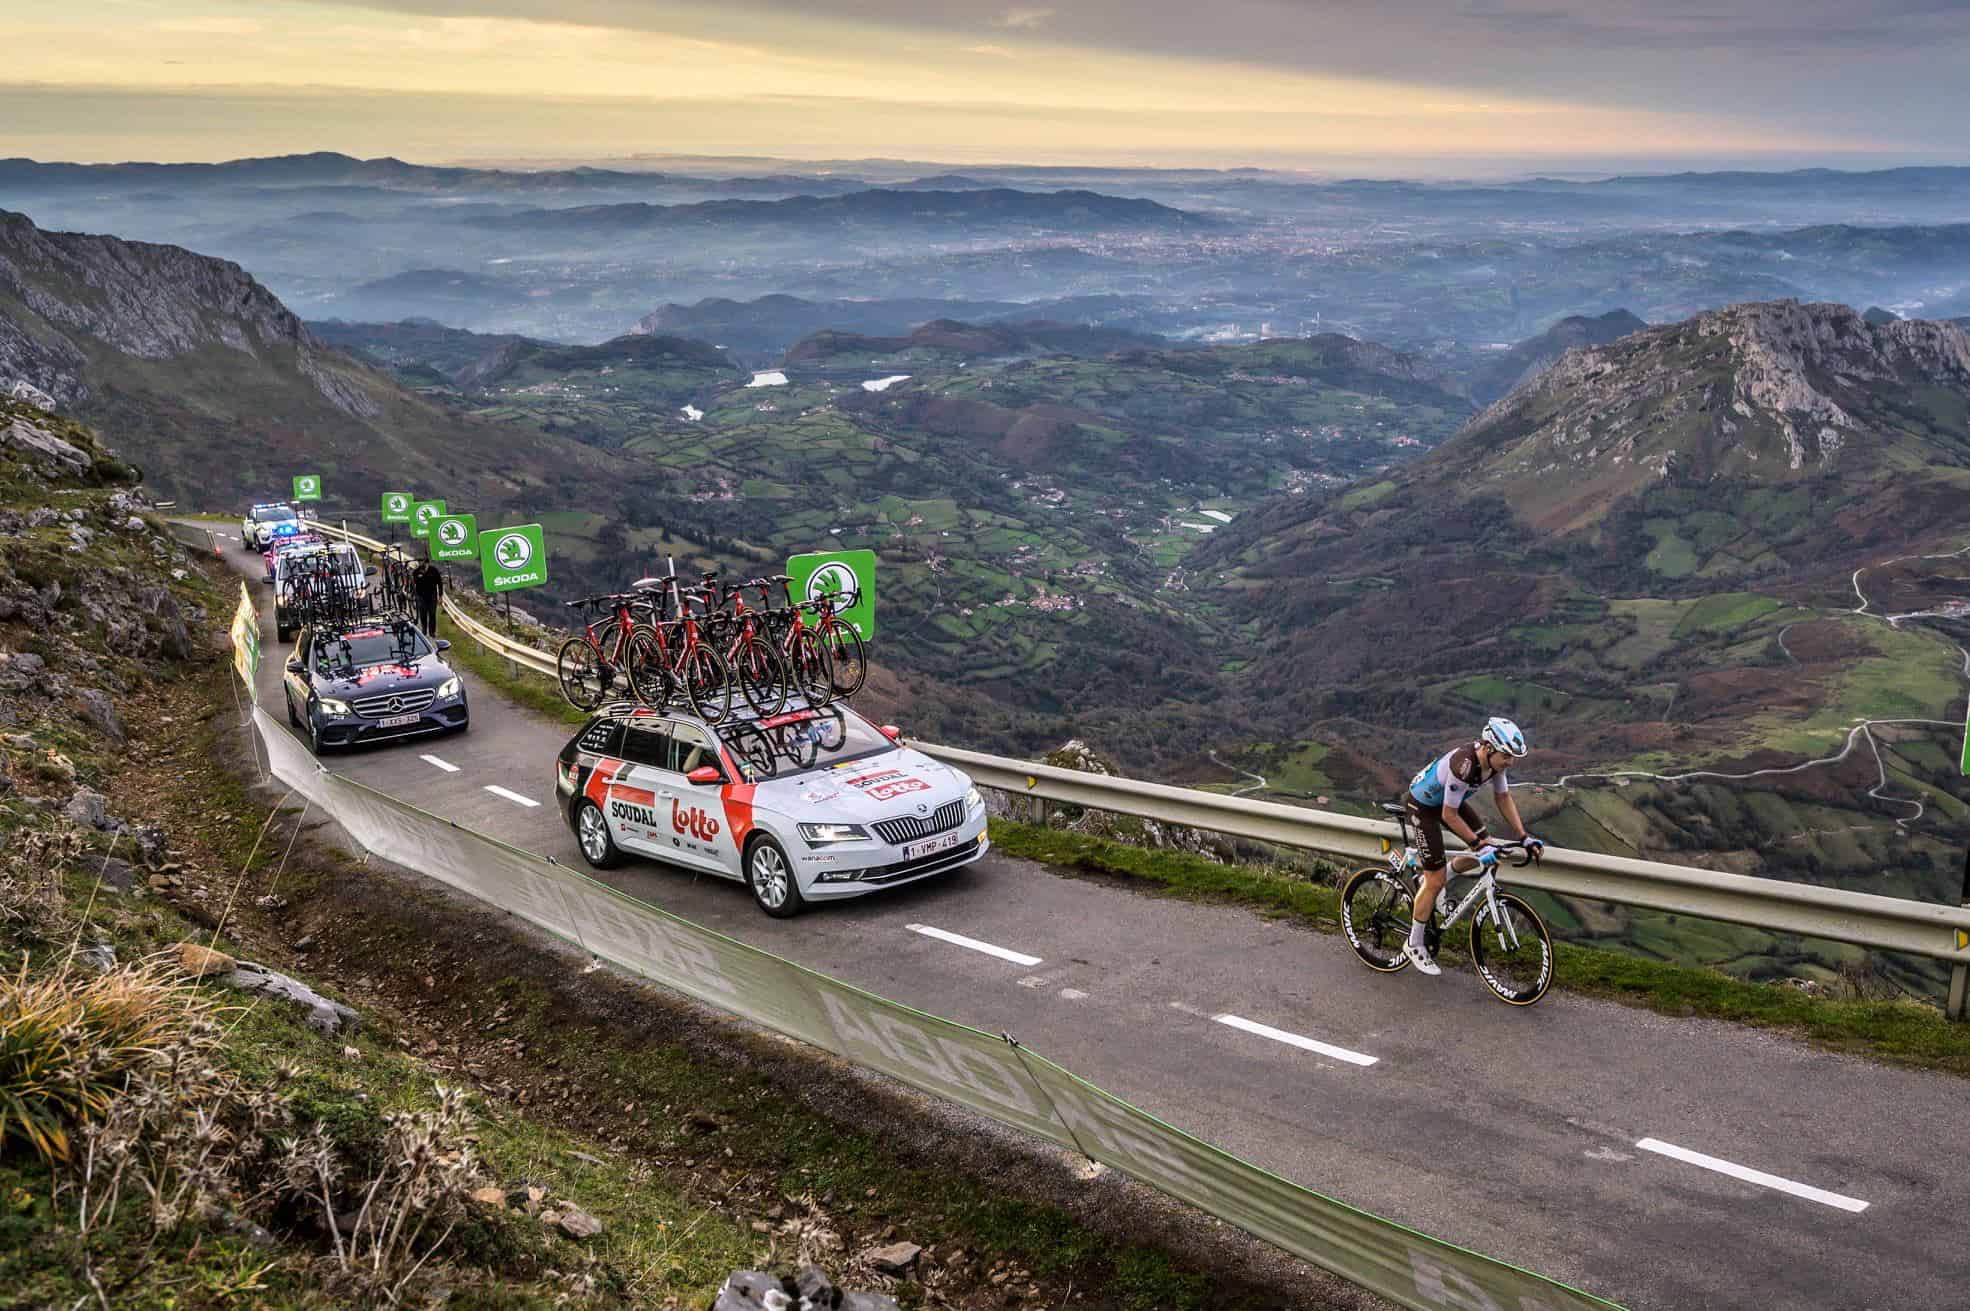 Angliru view from Summit Vuelta 2020